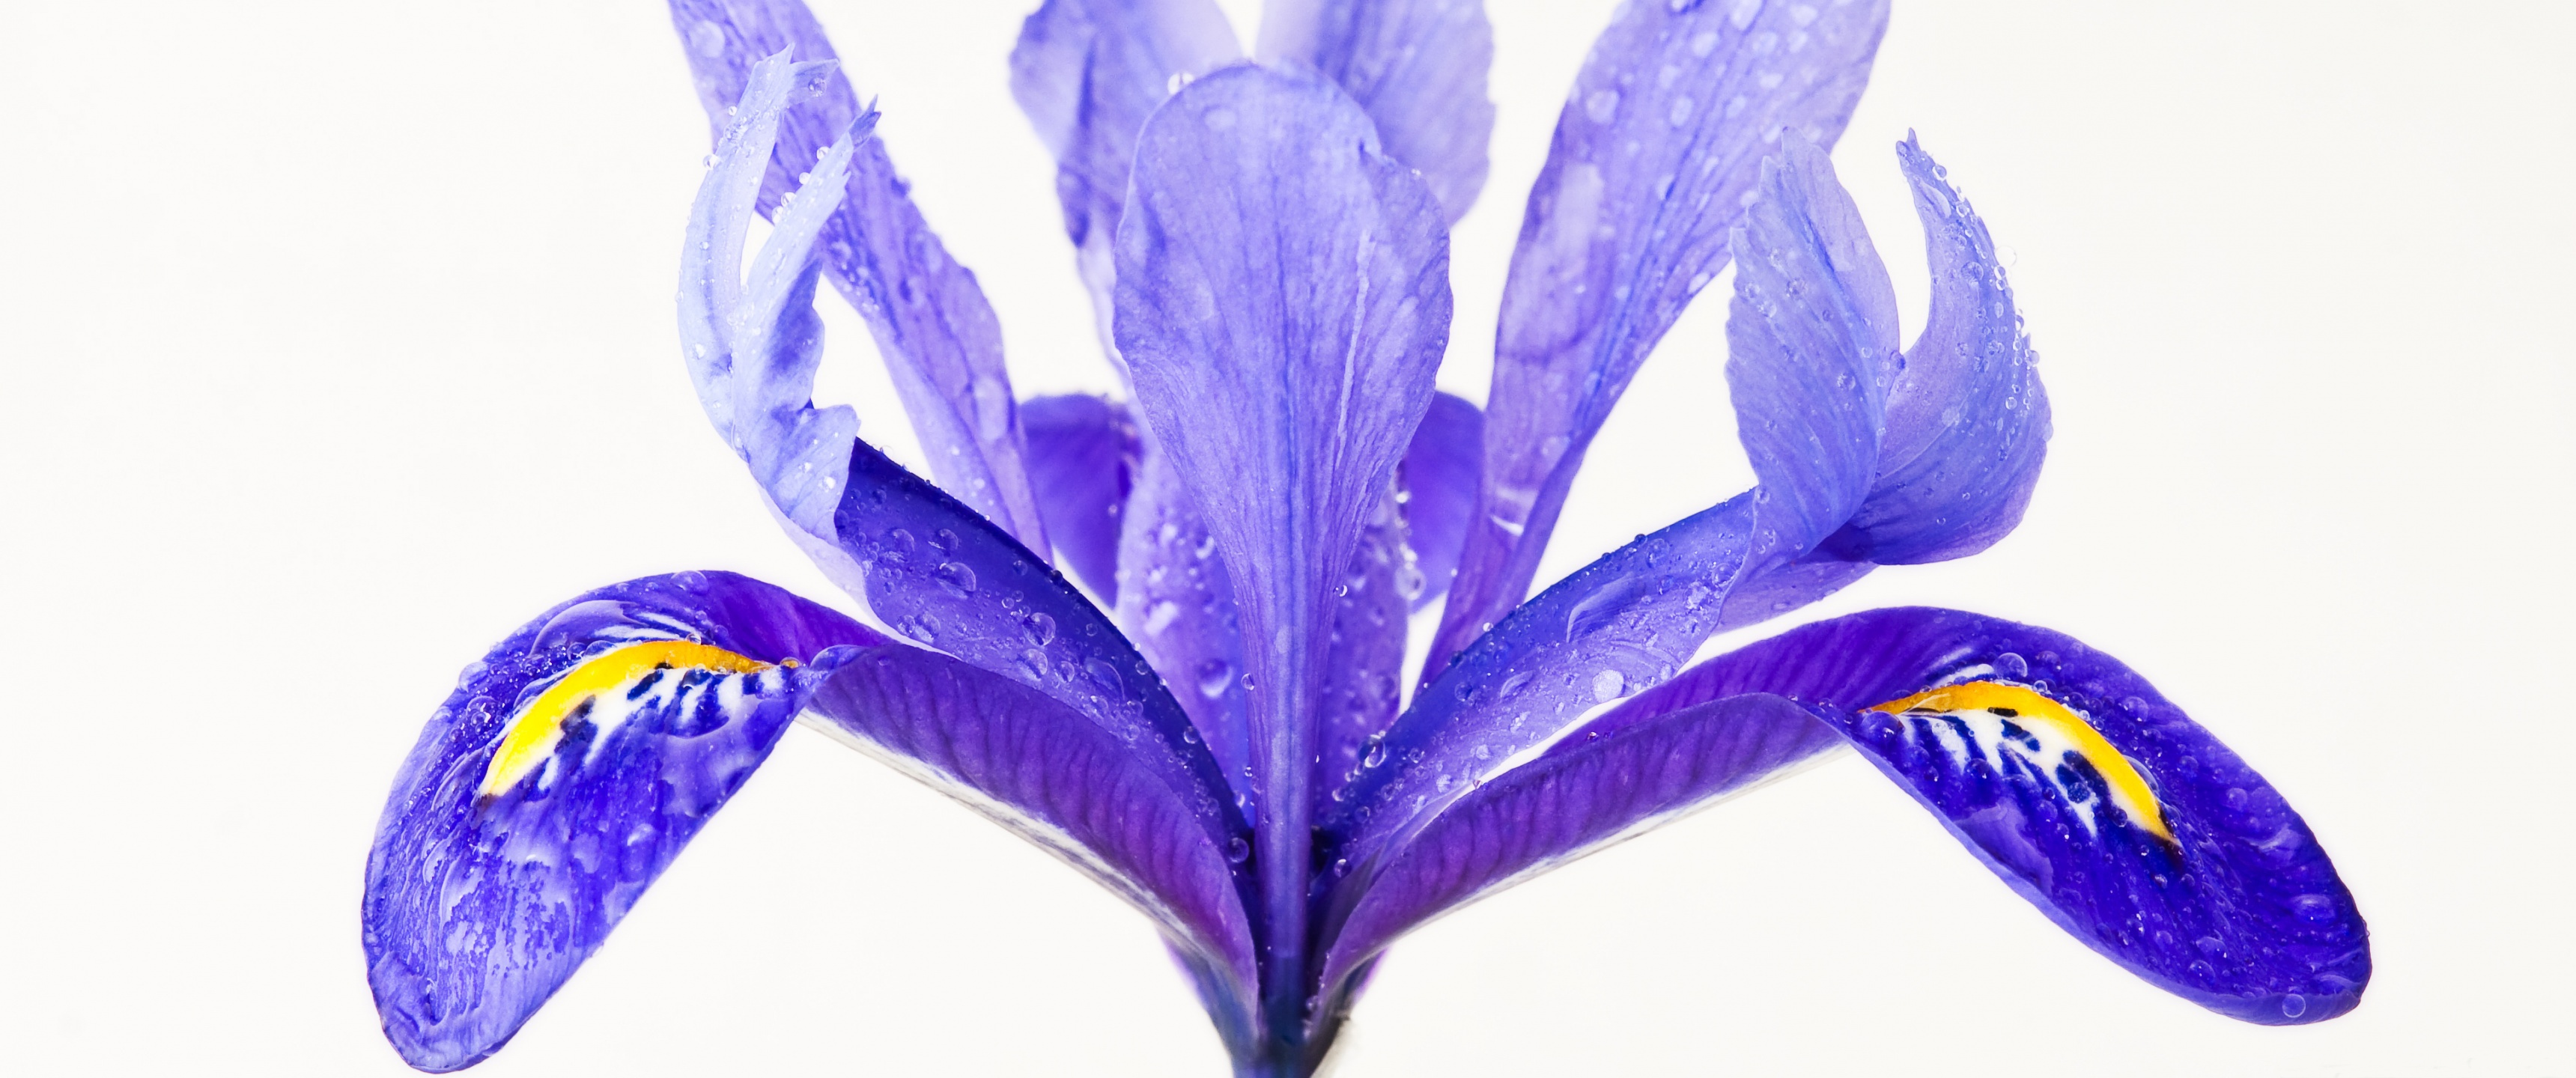 water drops on a purple iris flower, макро, петушки, фиолетовый цветок на белом фоне